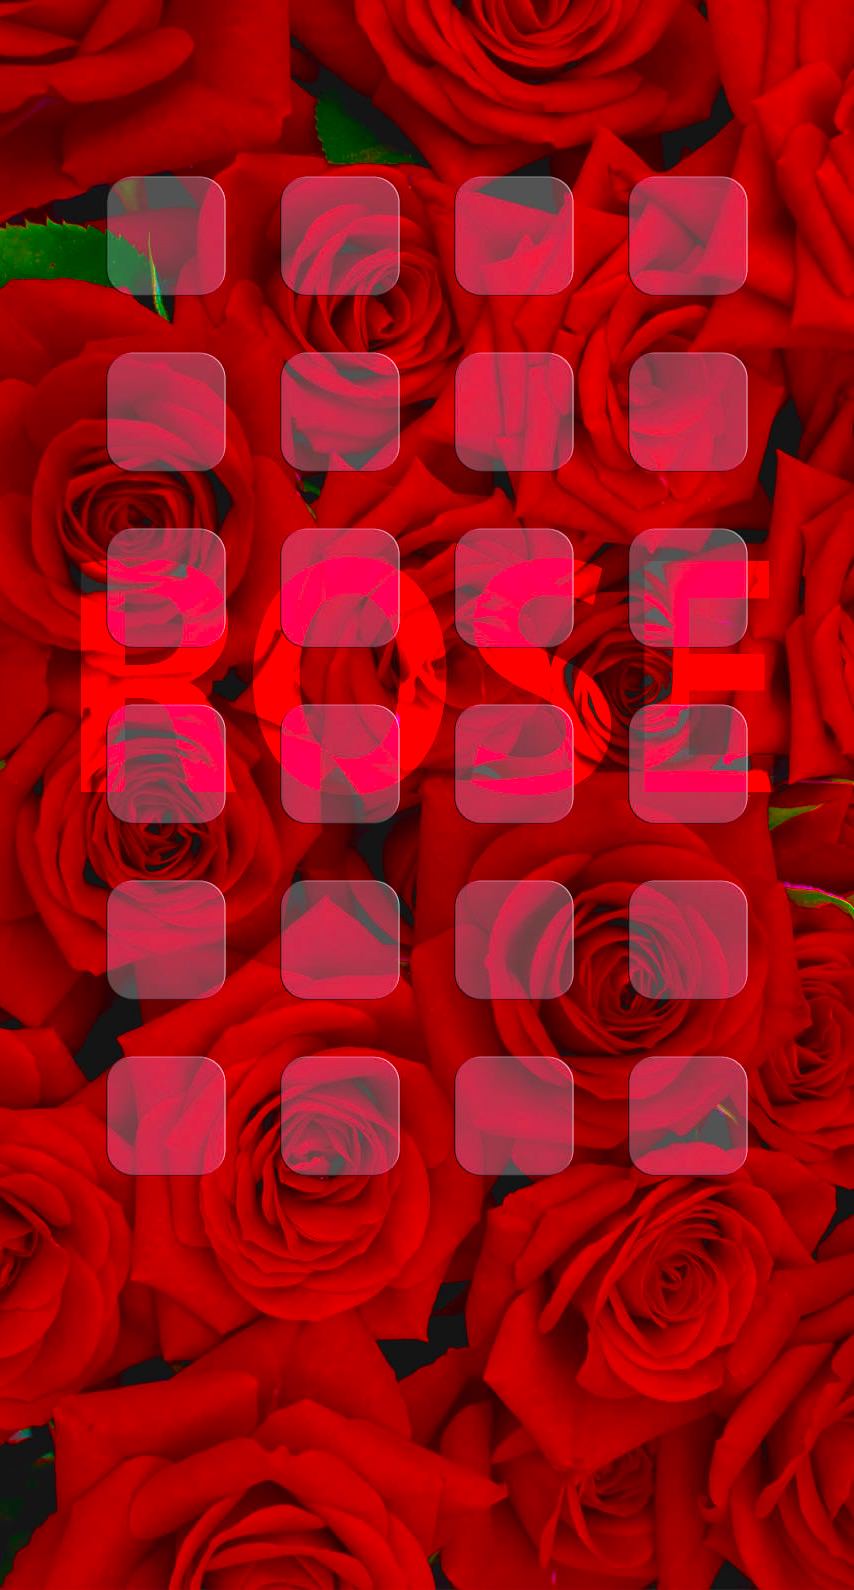  Wallpaper Iphone 5 Bunga Mawar  Kumpulan Gambar Bunga 